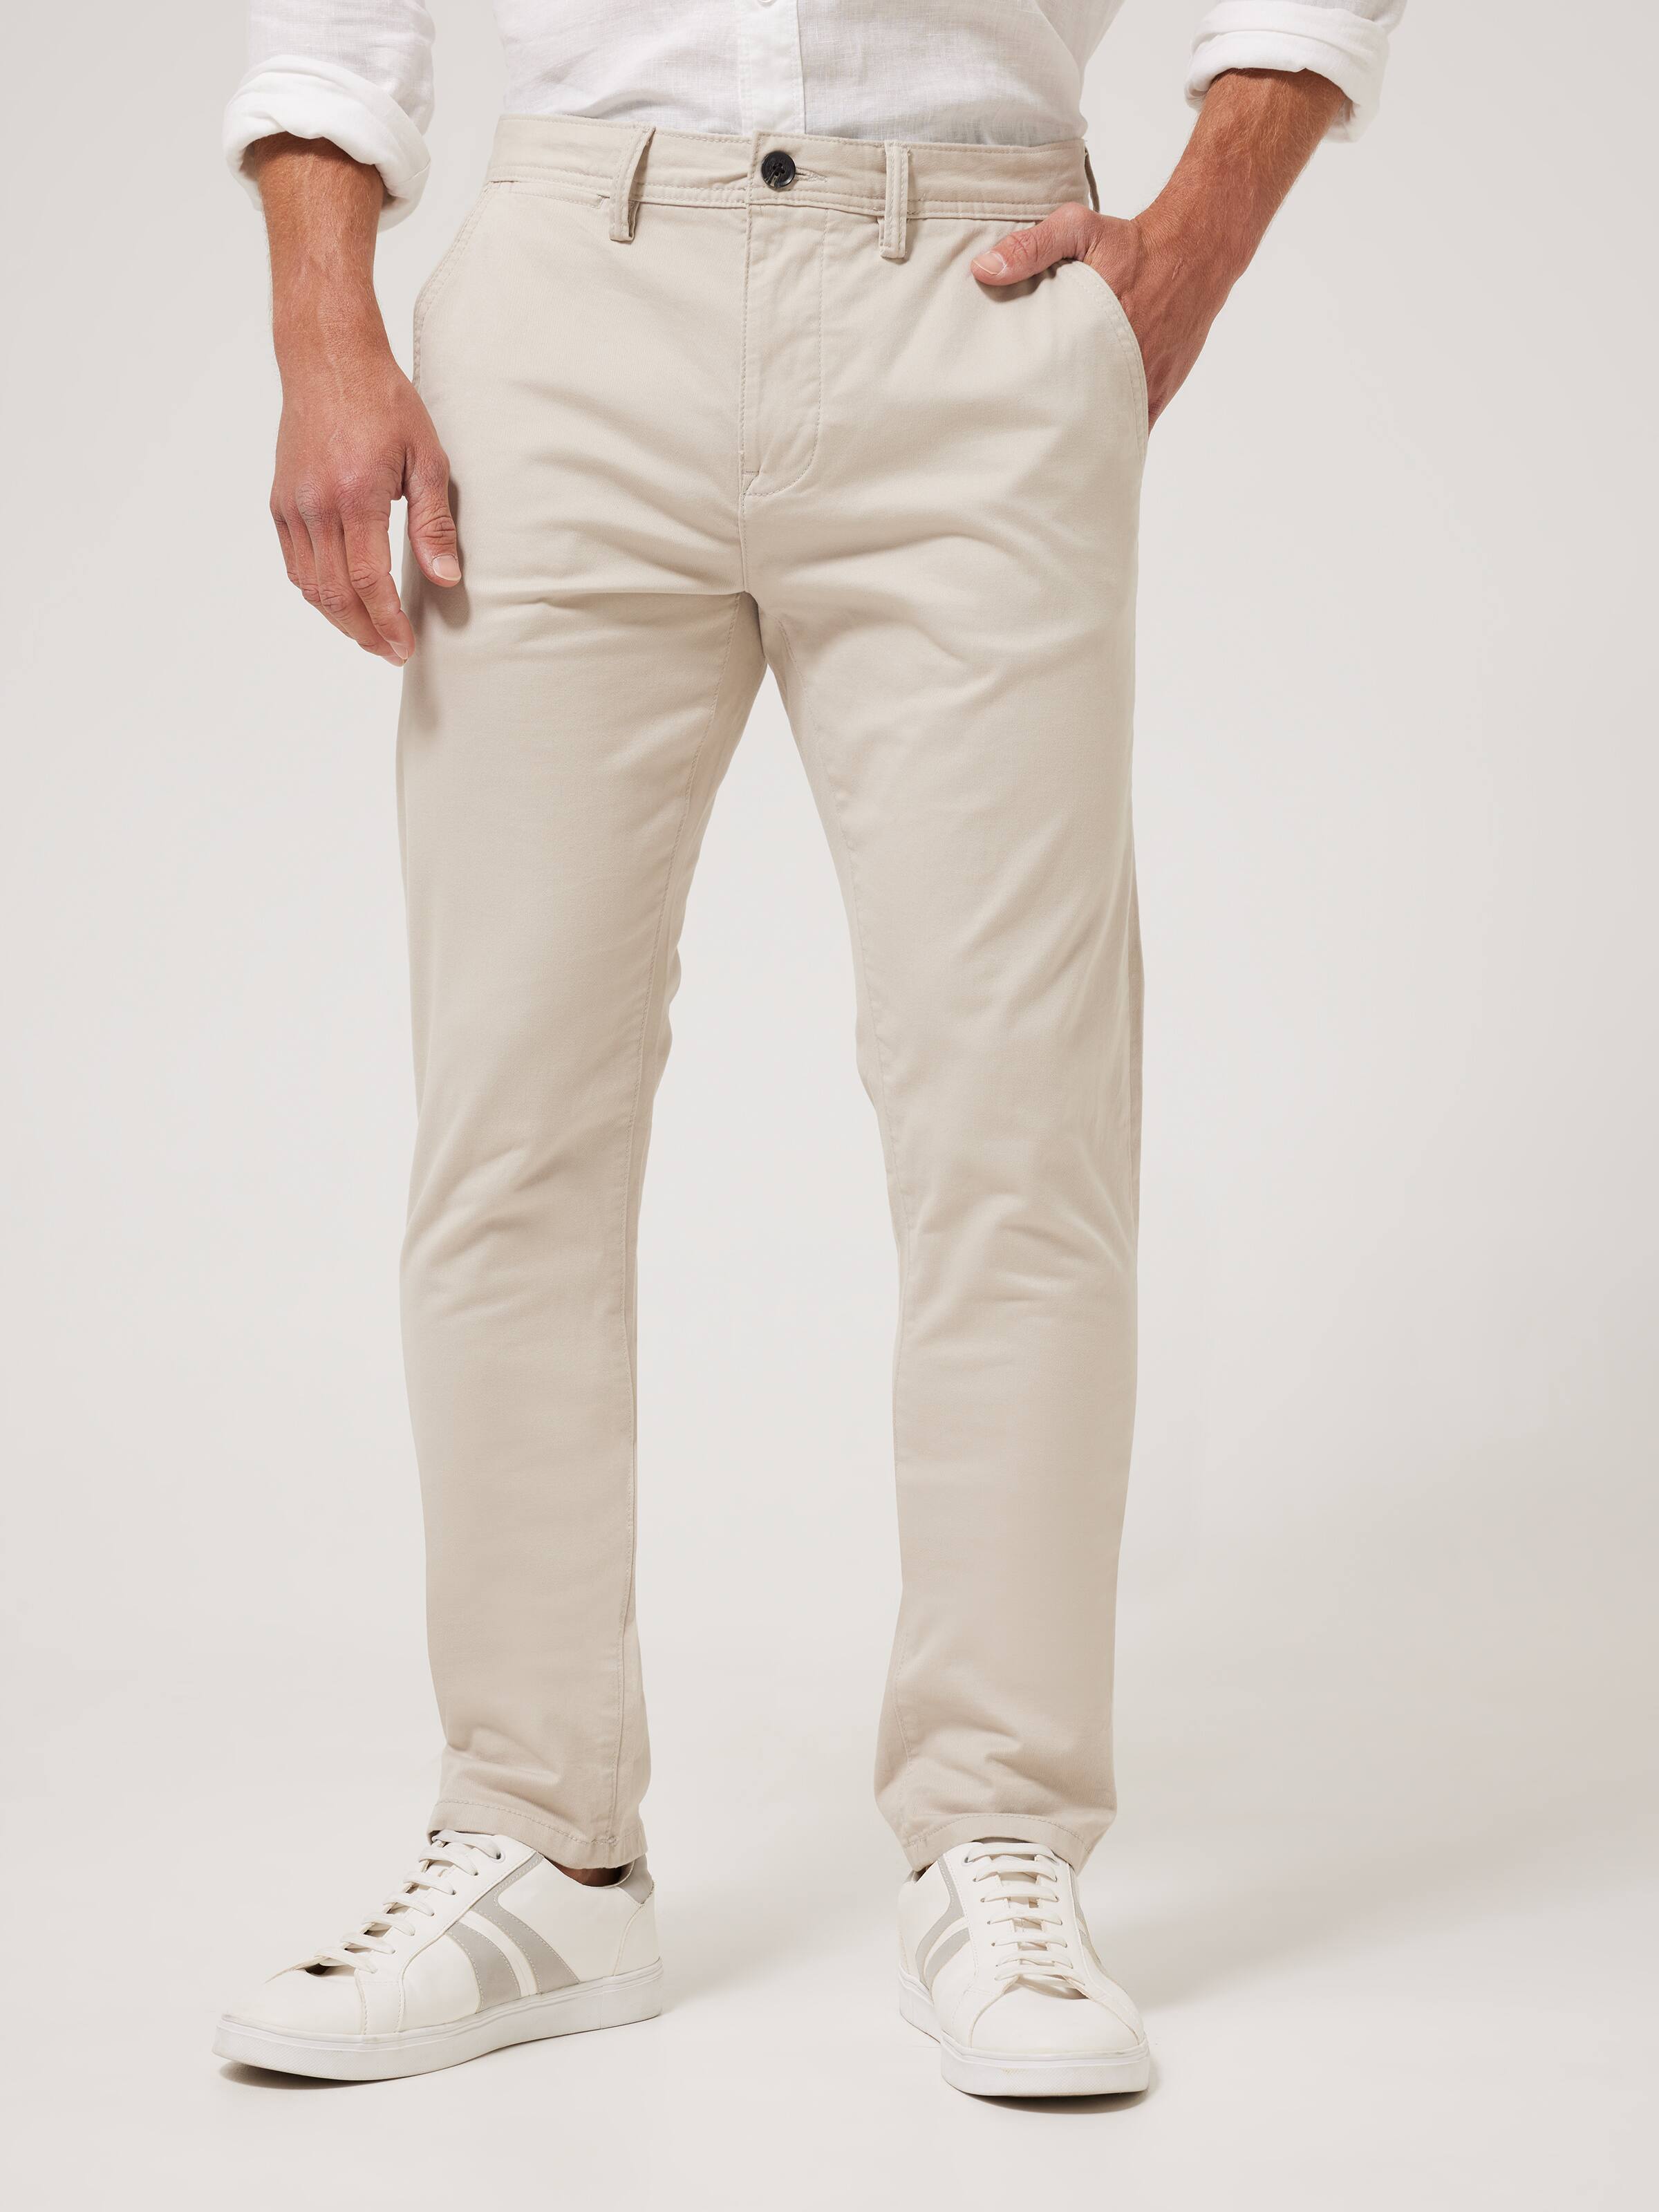 Slant Pocket Slim Straight Pant - Just Jeans Online